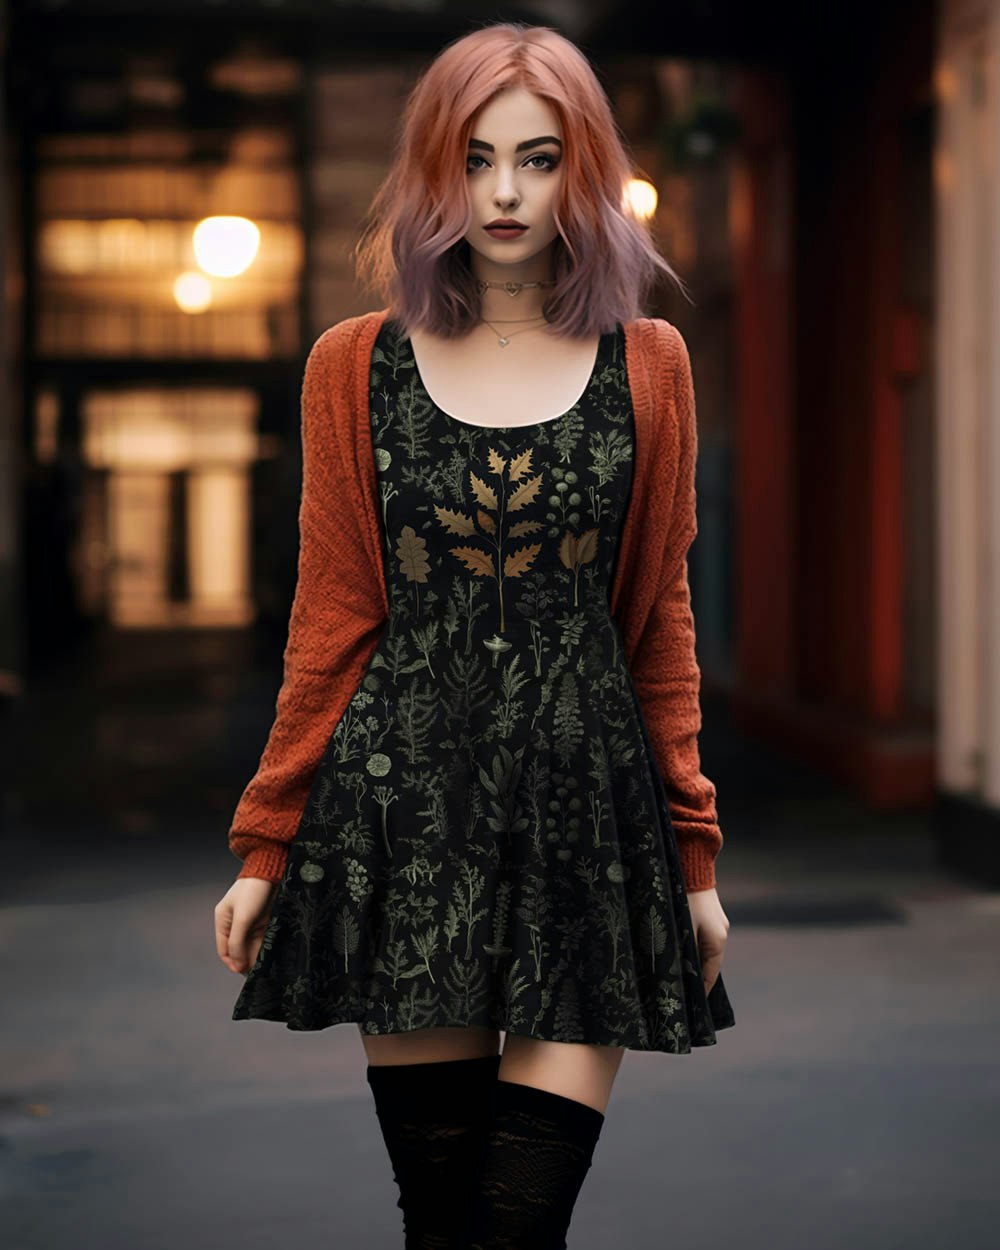 Autumn Memoir Skater Dress - Dark Academia Cute Black Vegan Dress, Witchy Pagan Occult Fashion, Christmas Goth Gifts